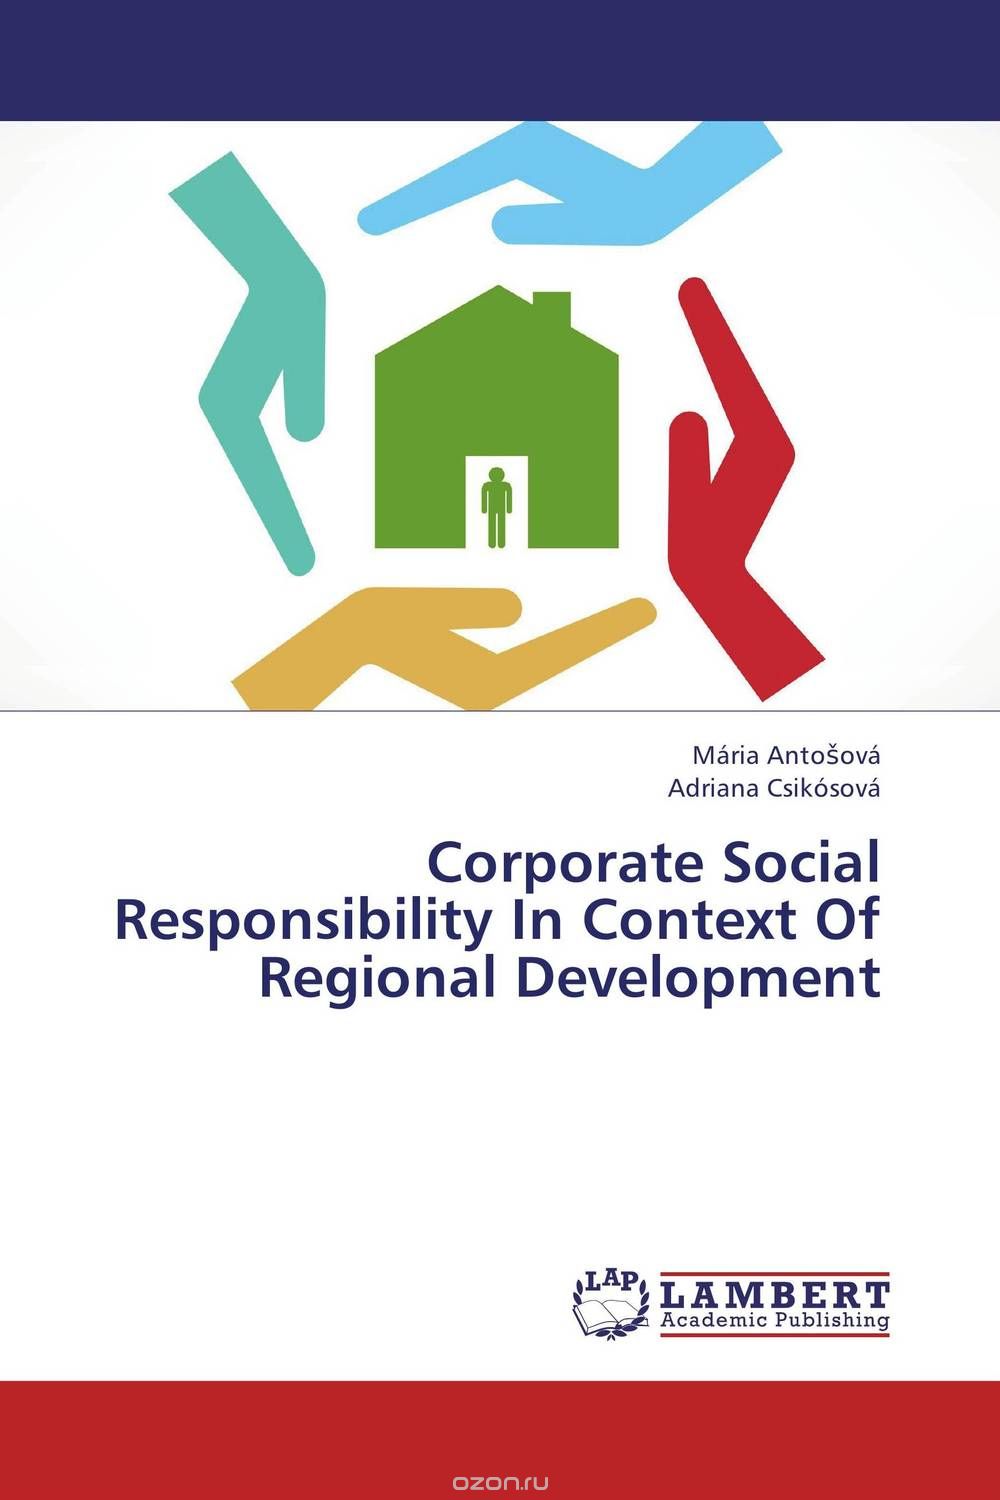 Скачать книгу "Corporate Social Responsibility In Context Of Regional Development"